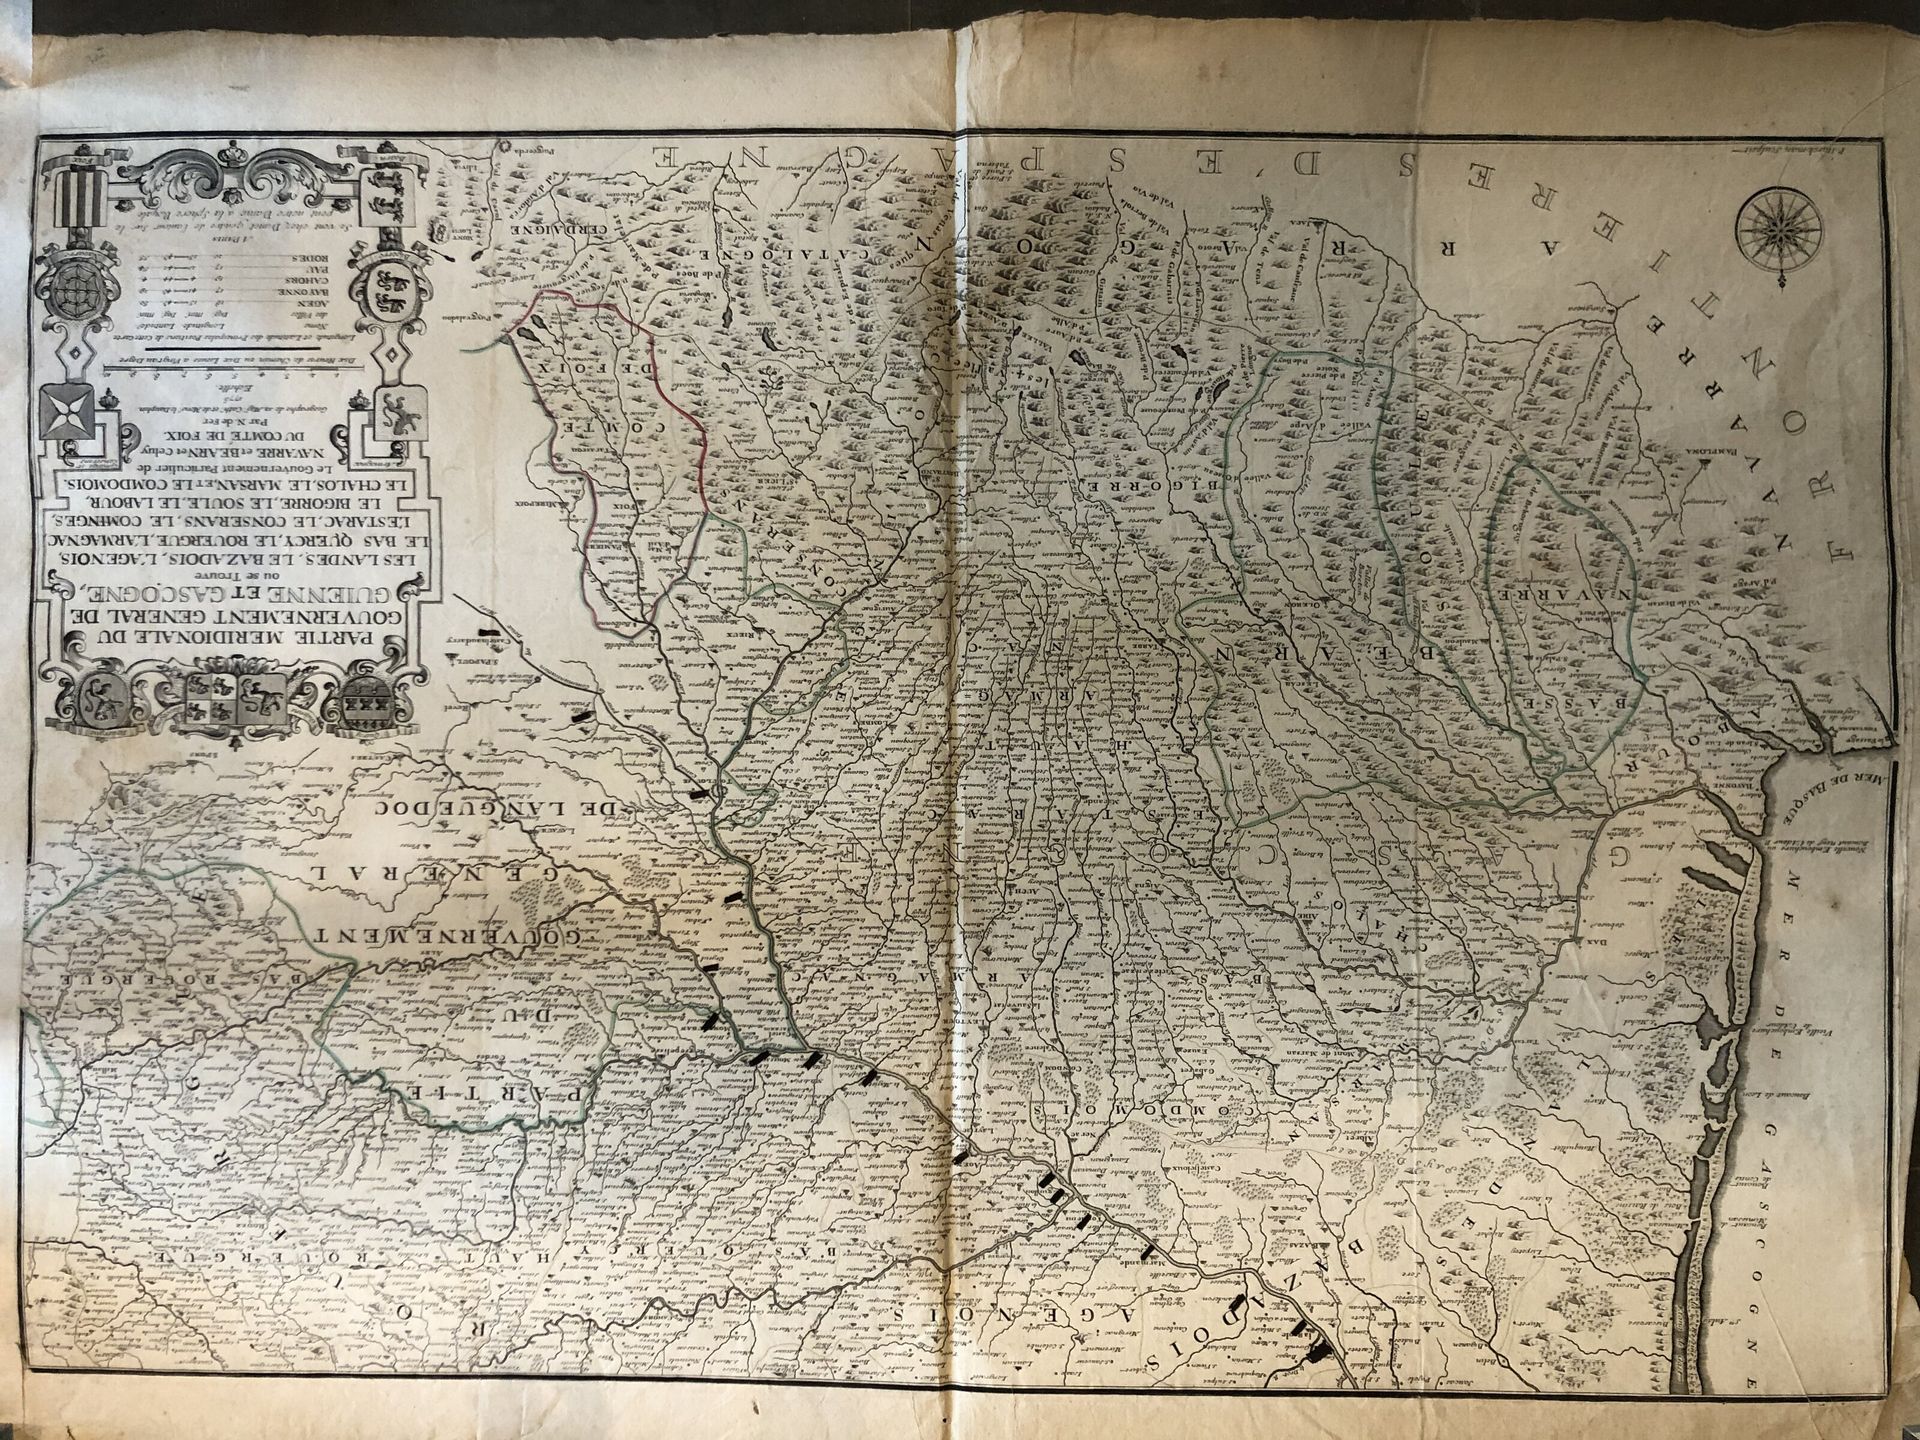 FER, N. De. 几内亚和加斯科涅省政府的经区。达内，1775年。旧殖民地的边界。褶皱的痕迹很多。500 x 740 mm.
De Fer绘制的Guyen&hellip;